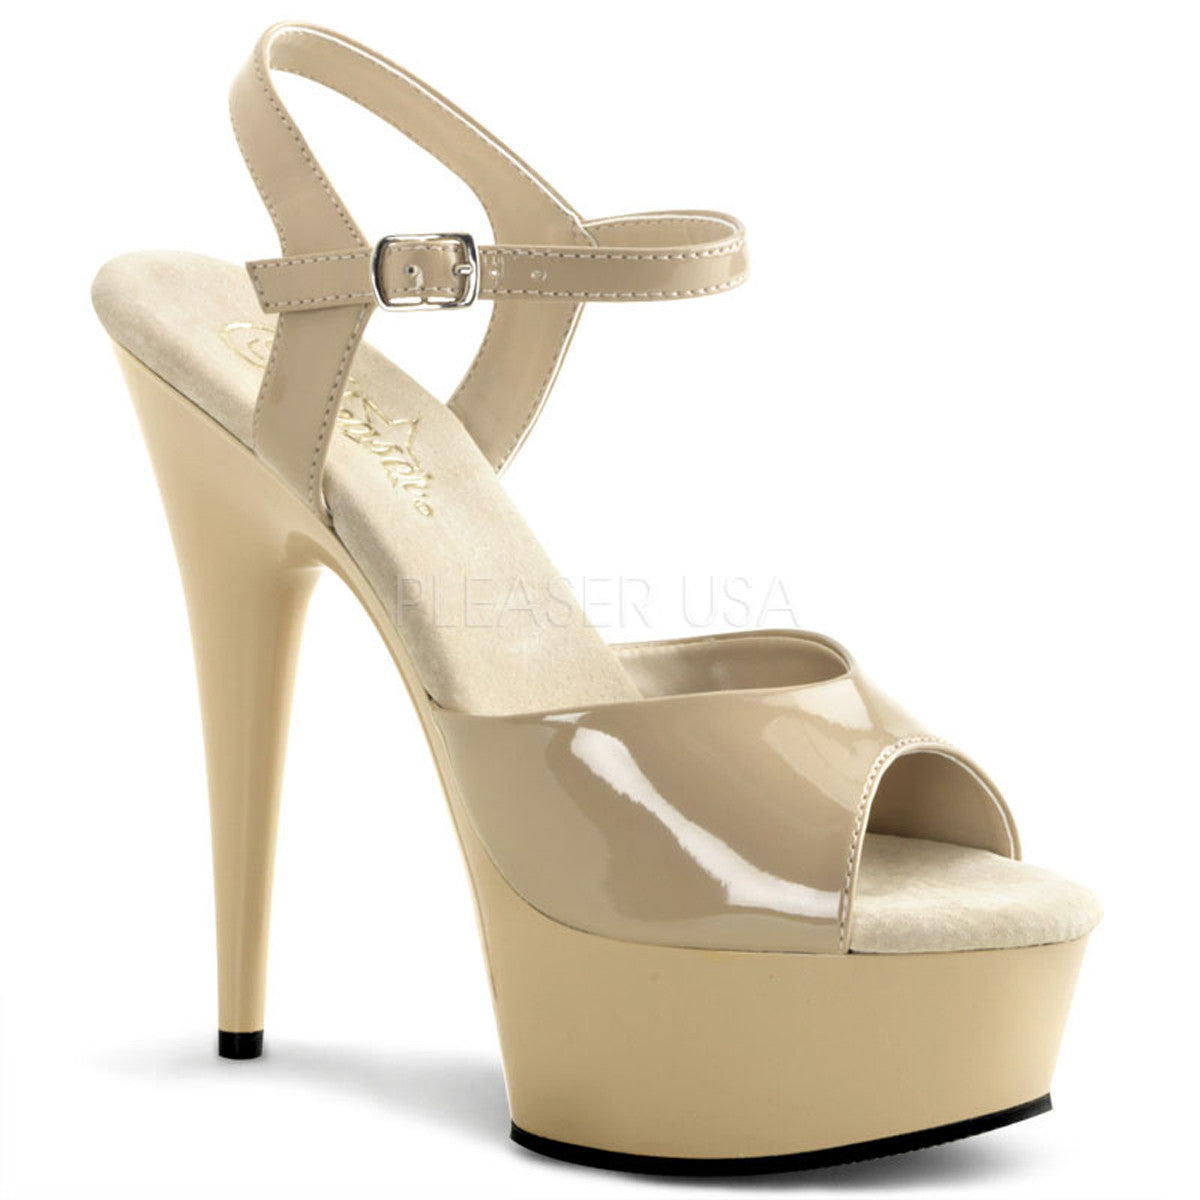 PLEASER DELIGHT-609 Cream-Cream Ankle Strap Sandals - Shoecup.com